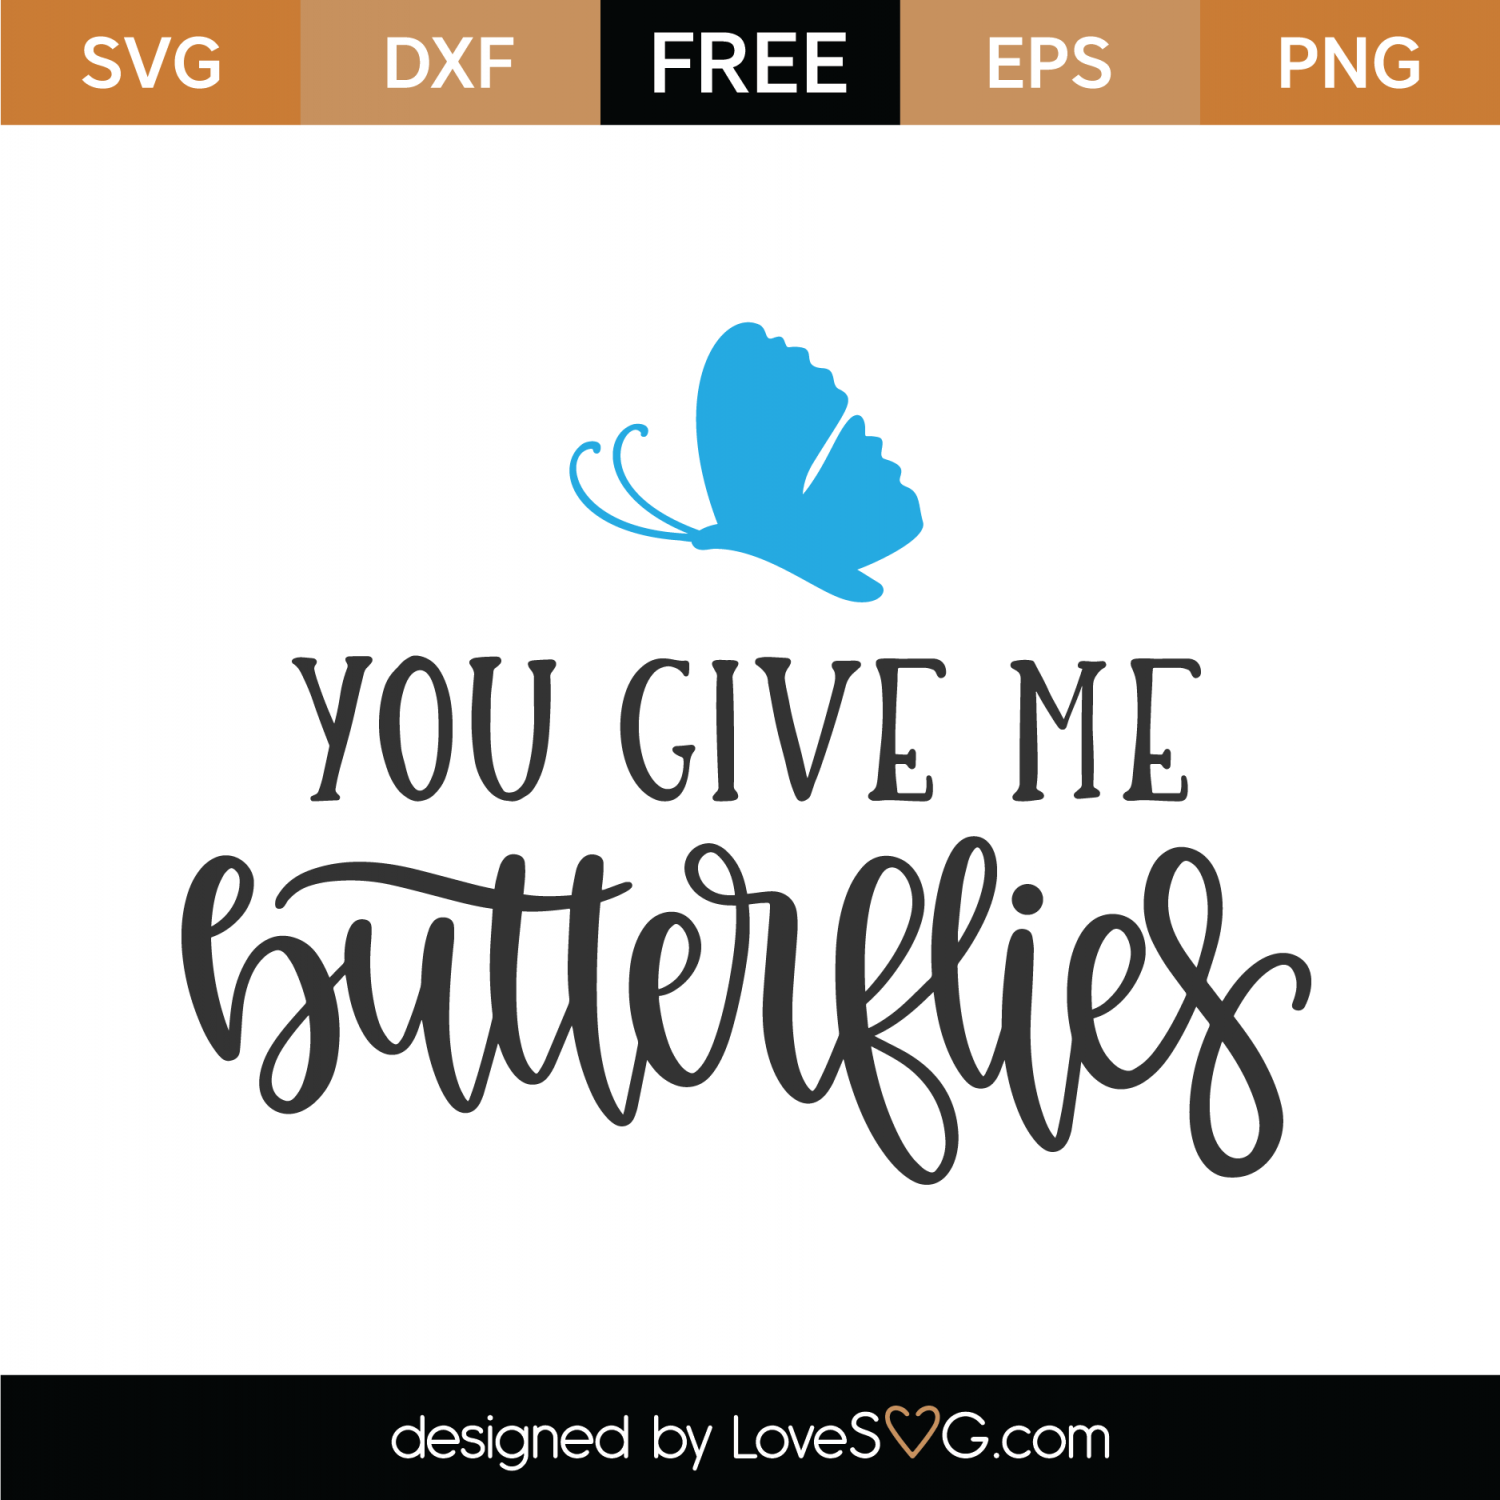 Download Free You Give Me Butterflies SVG Cut File | Lovesvg.com